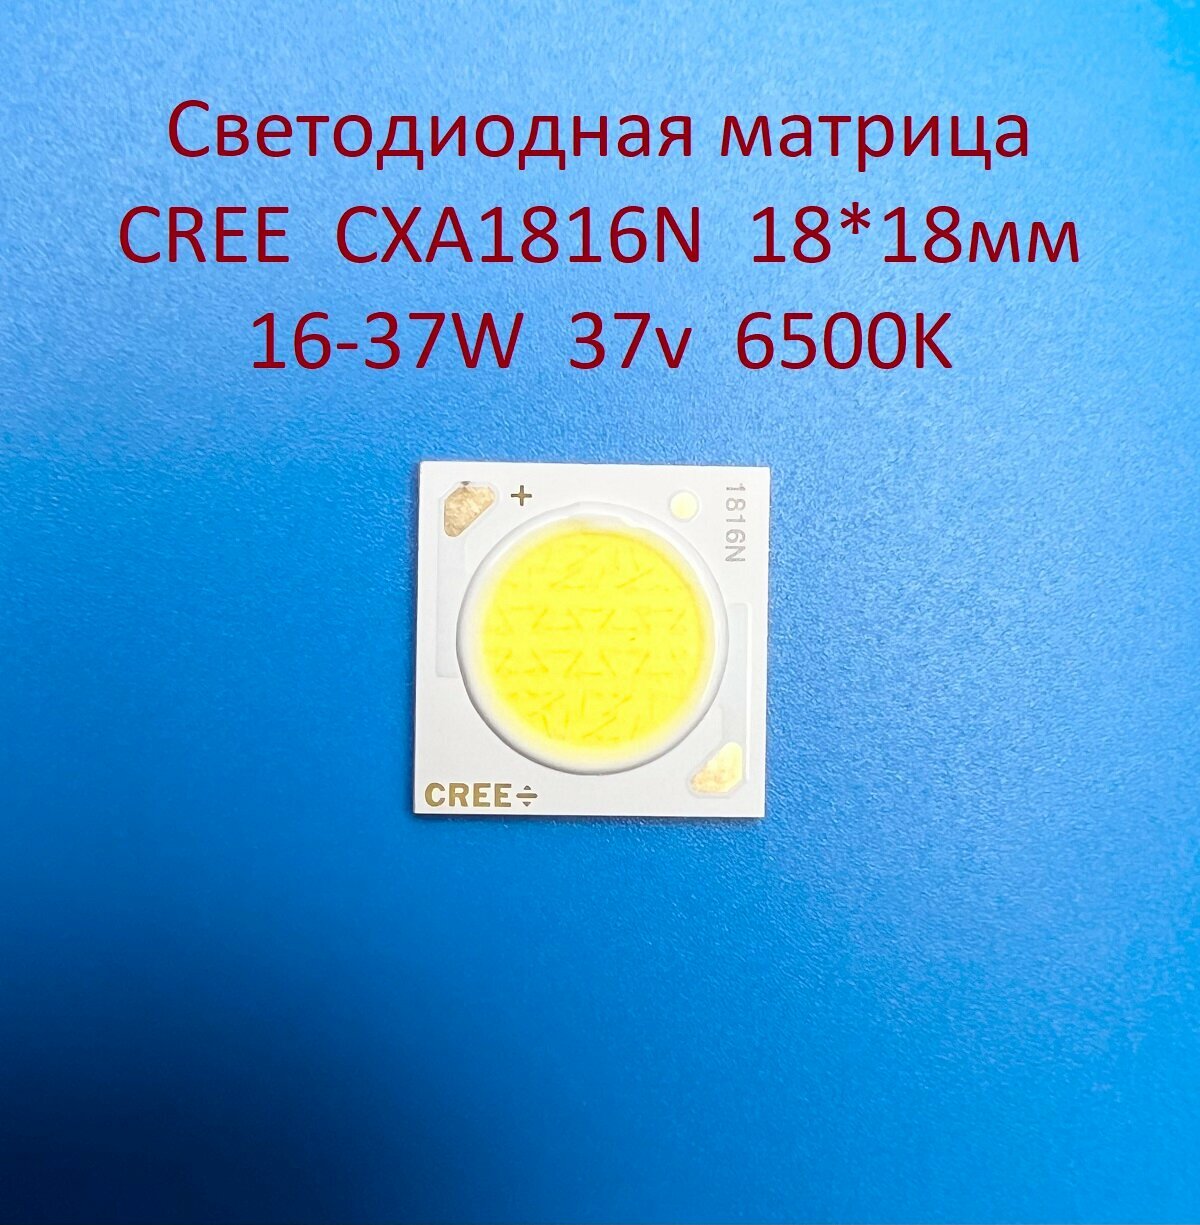 Светодиодная матрица Cree CXA1816N 16-37W 37v 450-1000mA Белая холодная 6500K 18*18мм